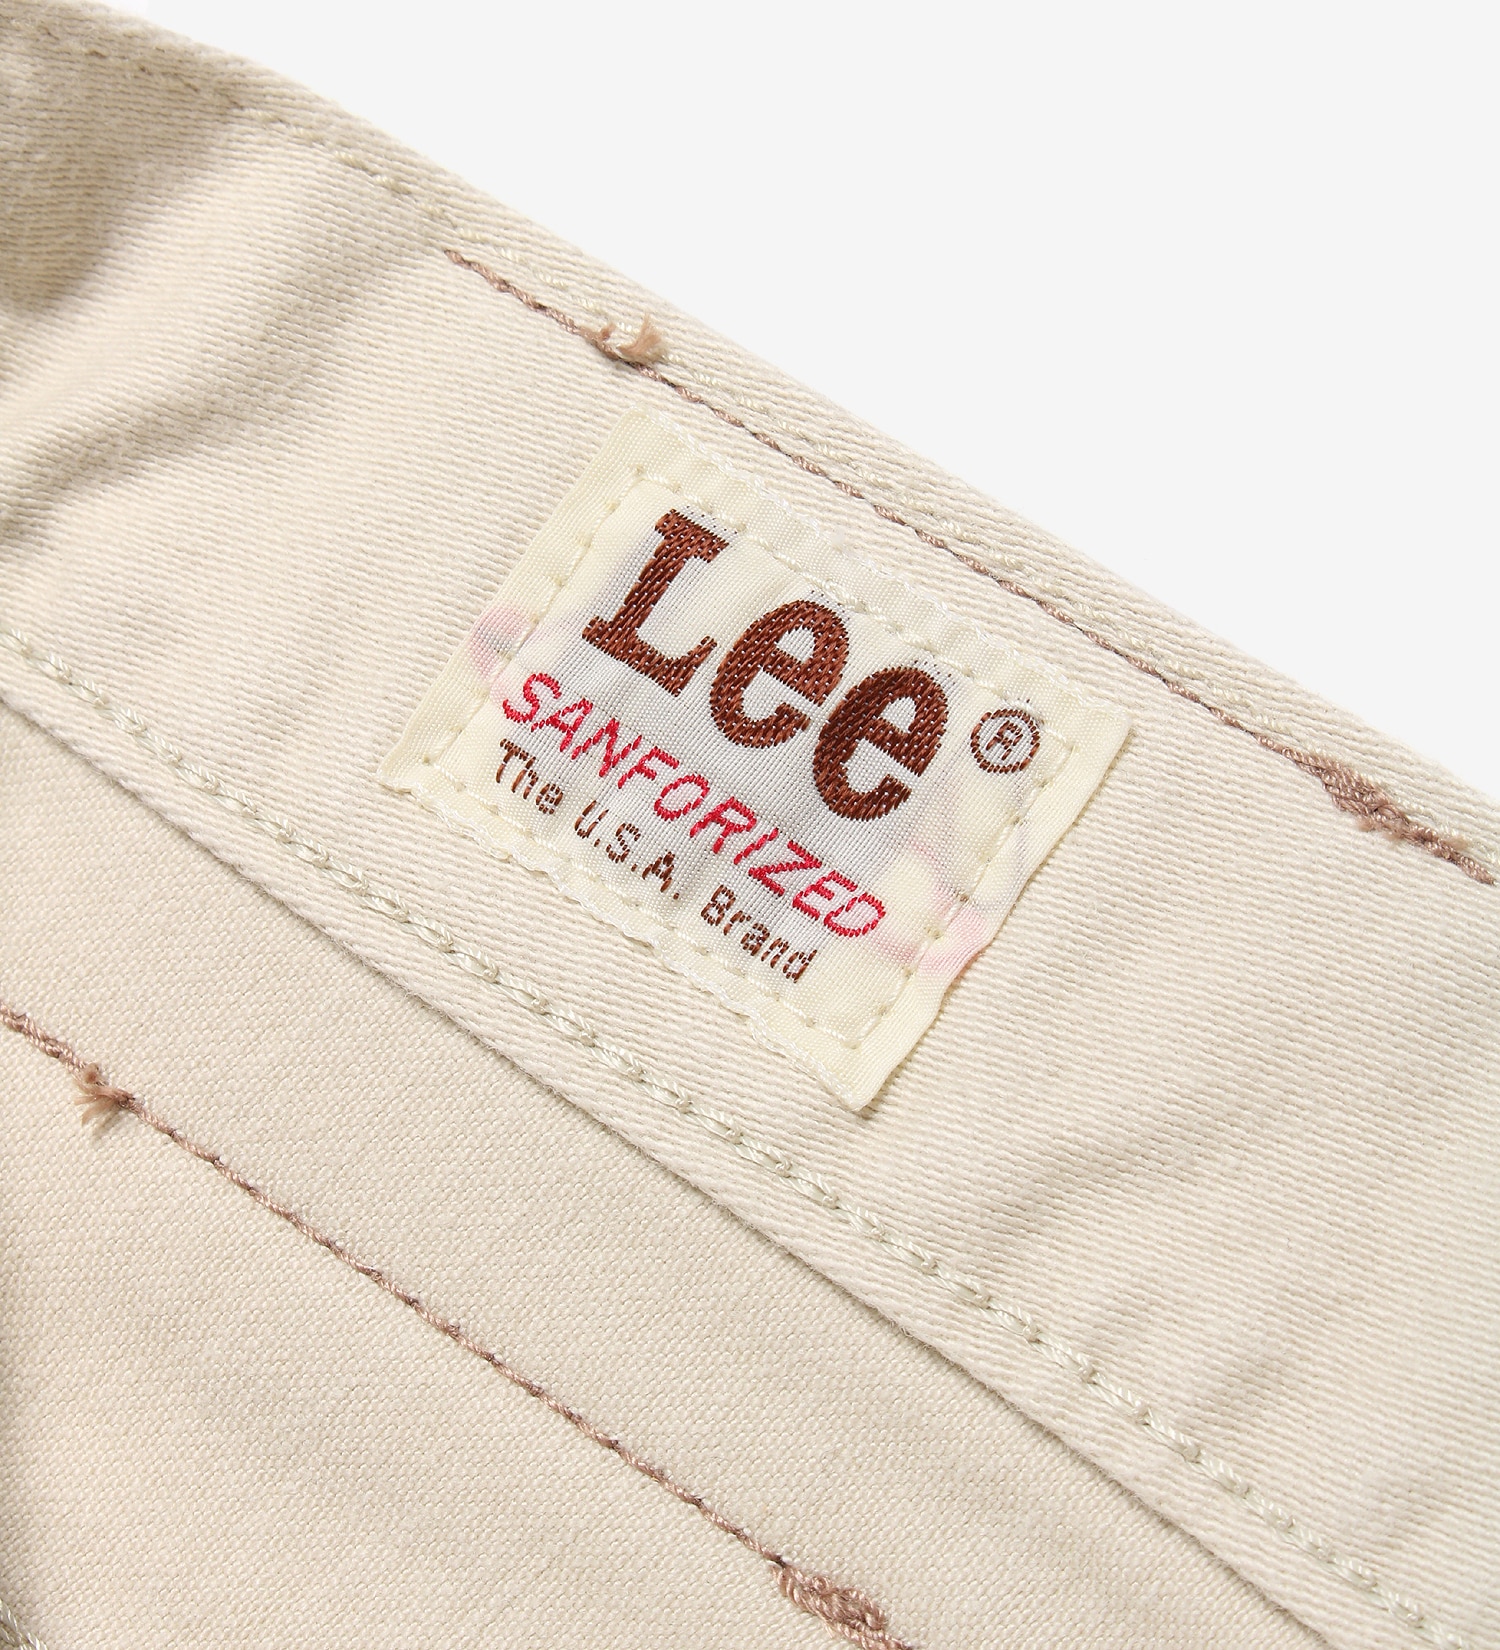 Lee(リー)の【試着対象】AMERICAN STANDARD 102 ブーツカット（サテン）|パンツ/パンツ/メンズ|アイボリー